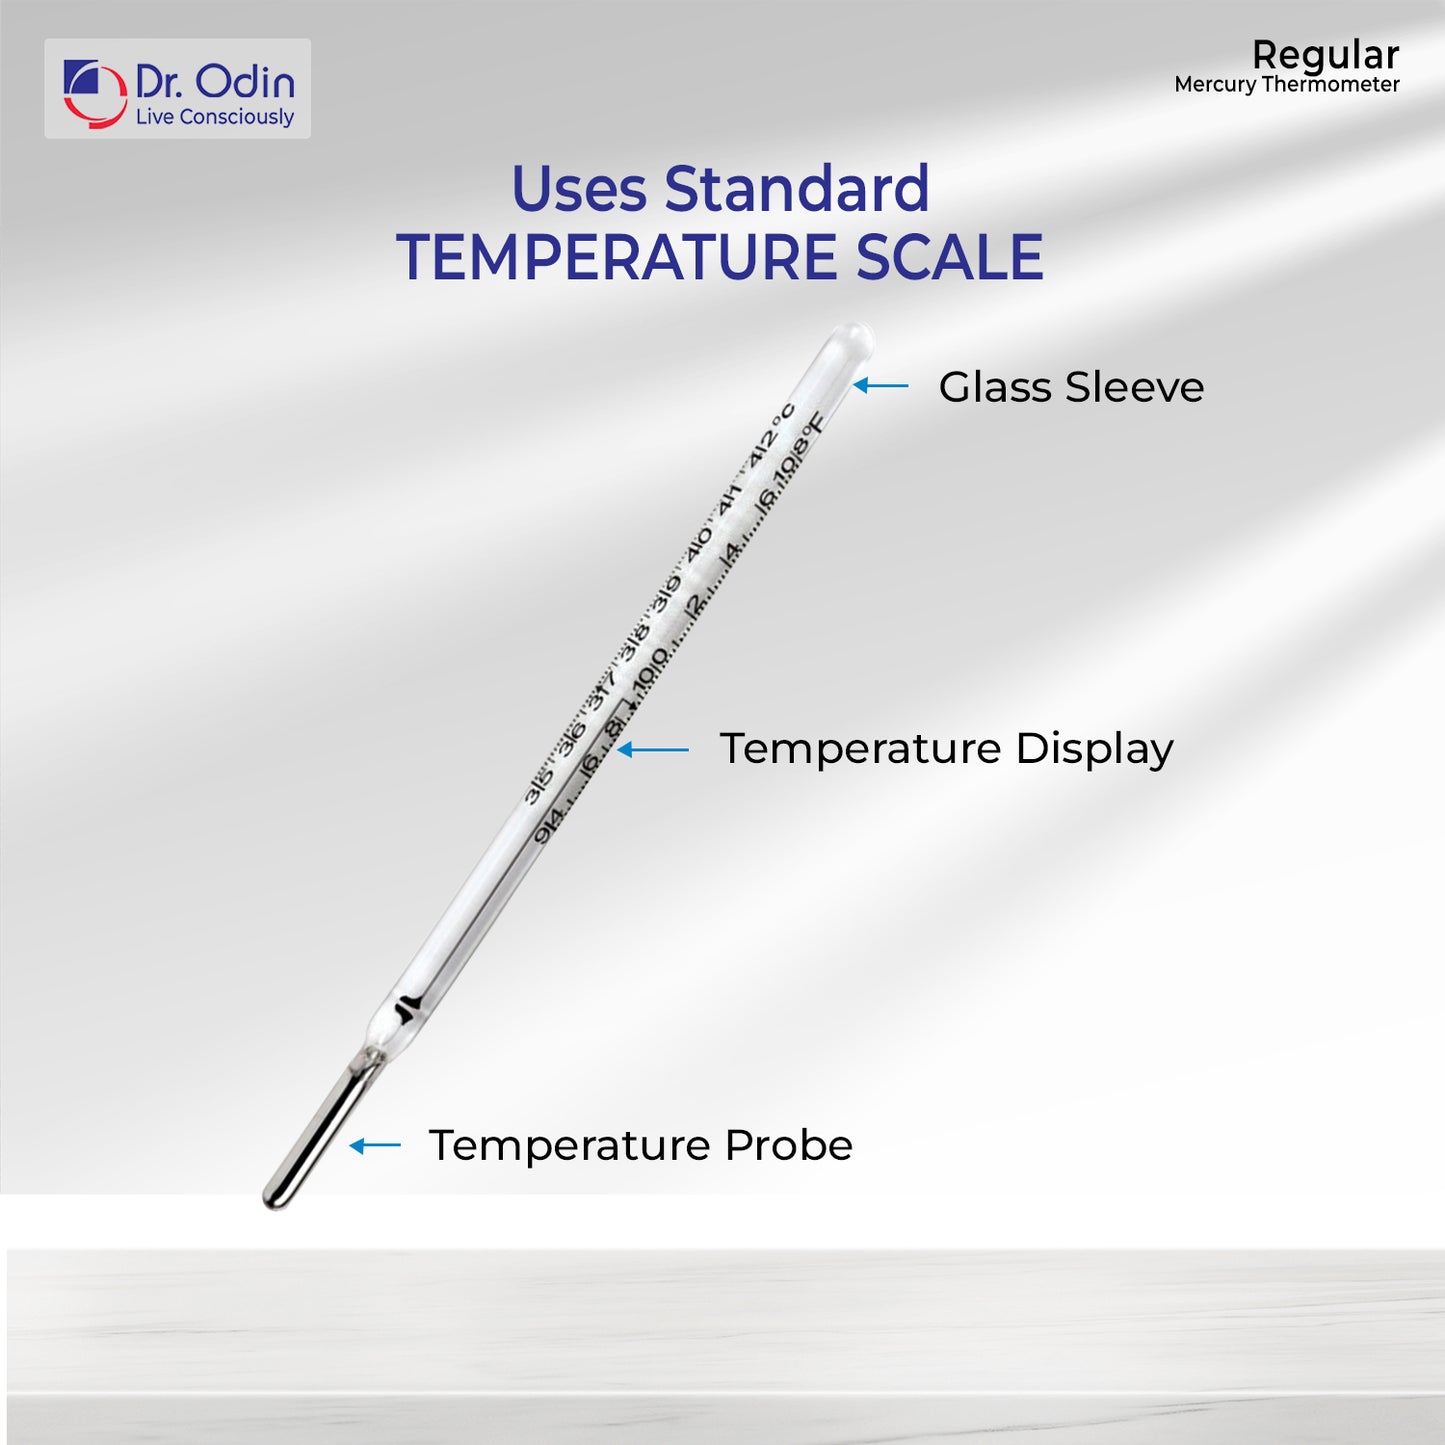 Mercury Thermometer Regular